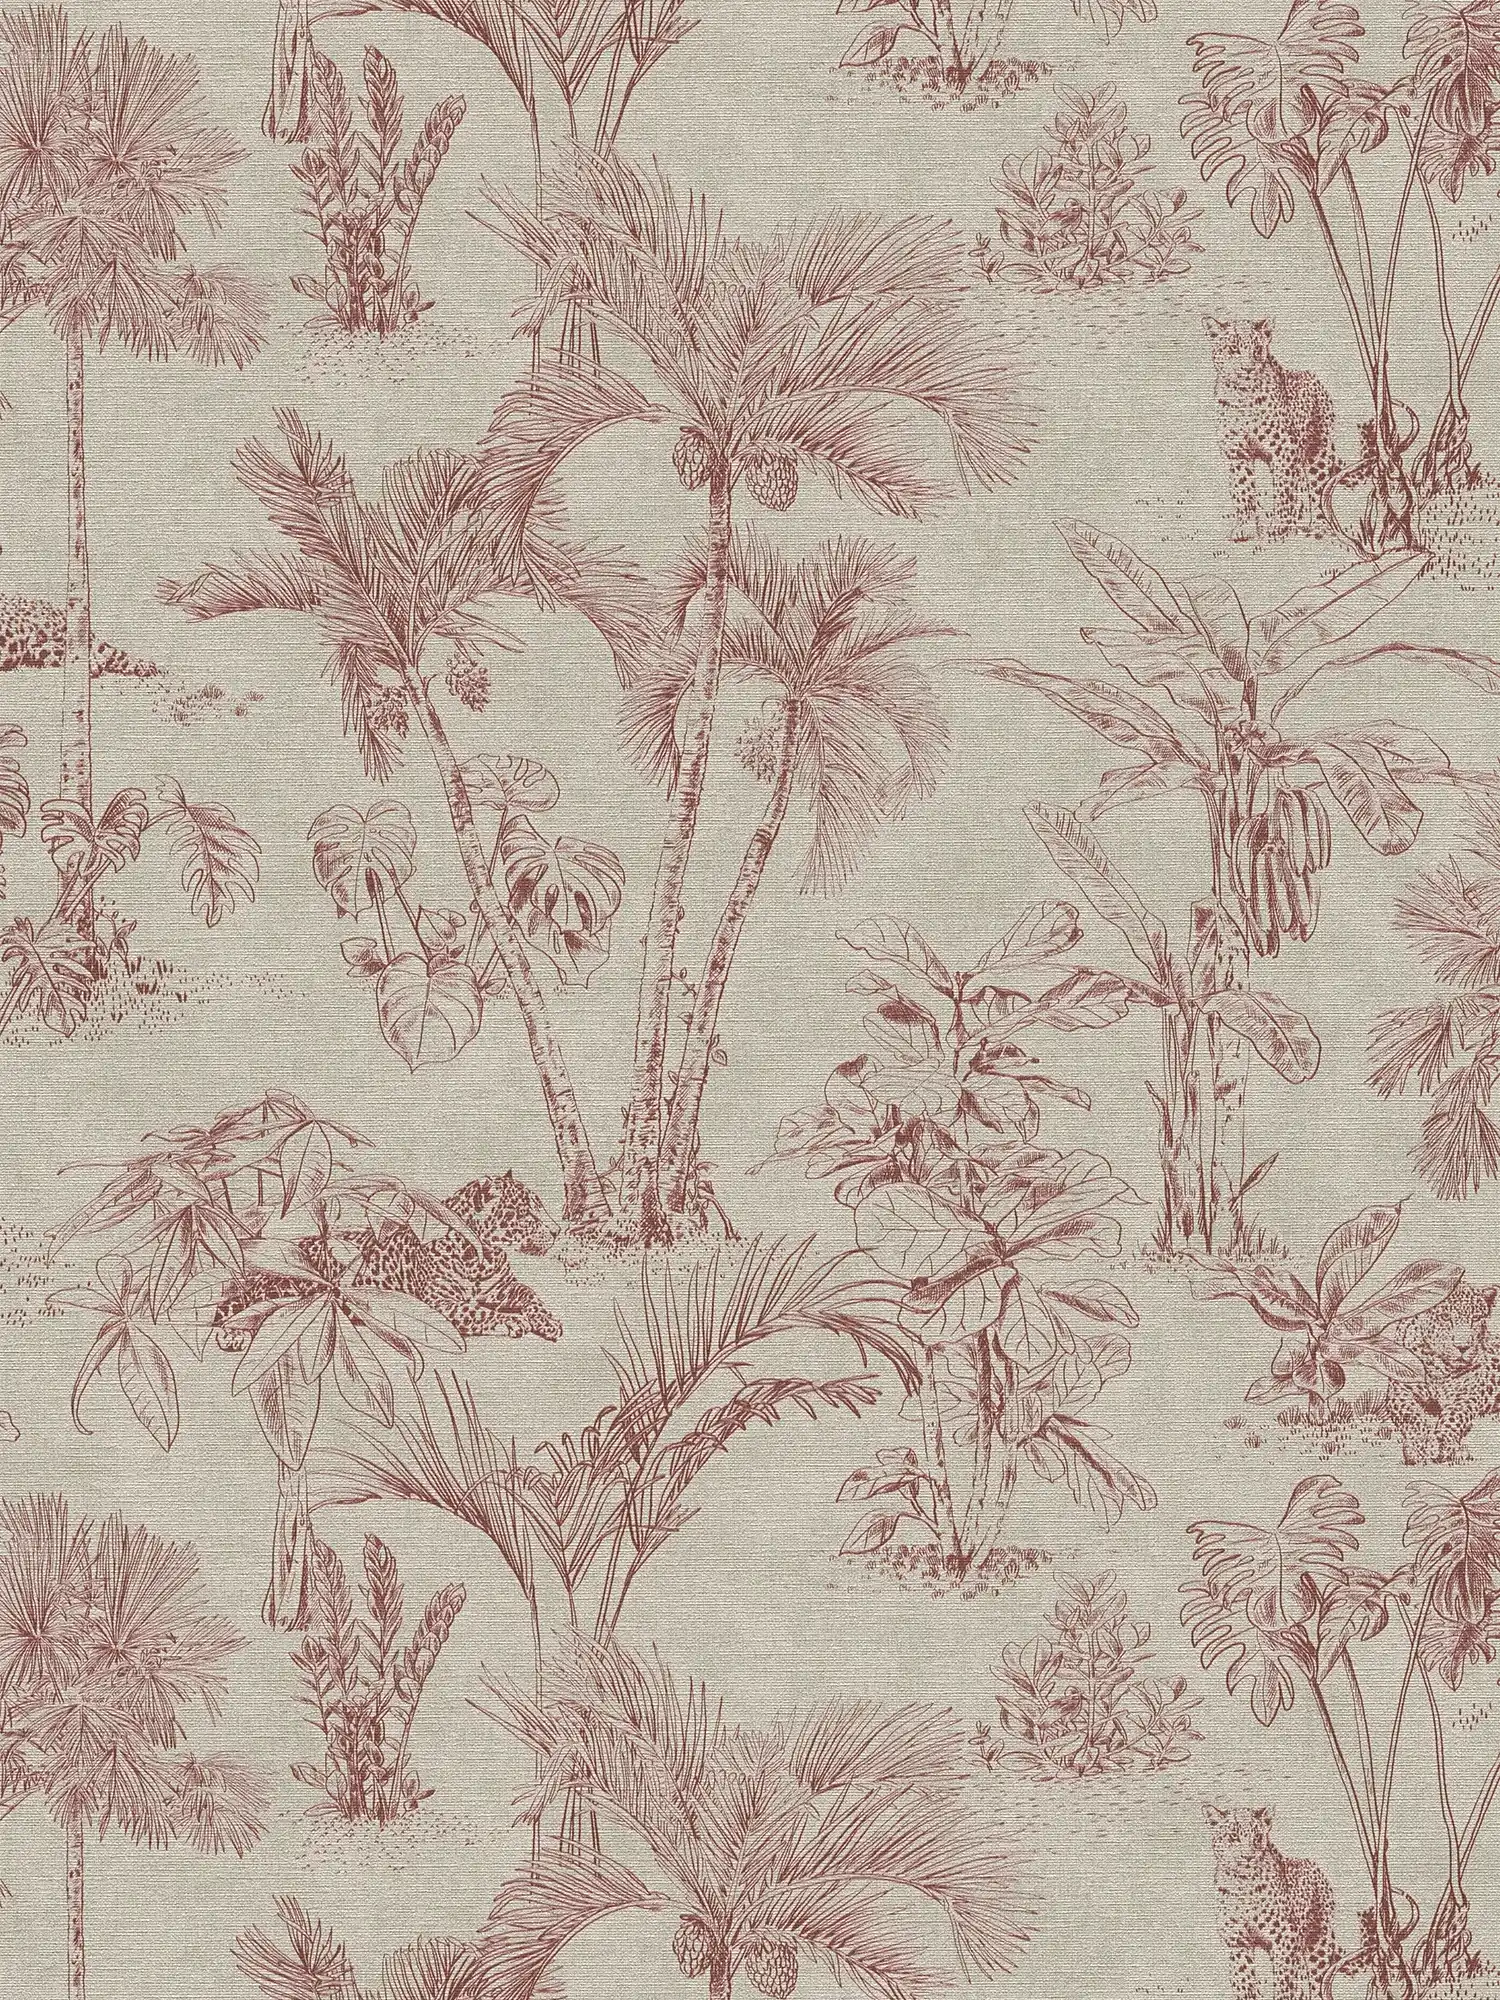 Tapete Dschungel Muster Palmen im Kolonial Stil – Braun, Rot
